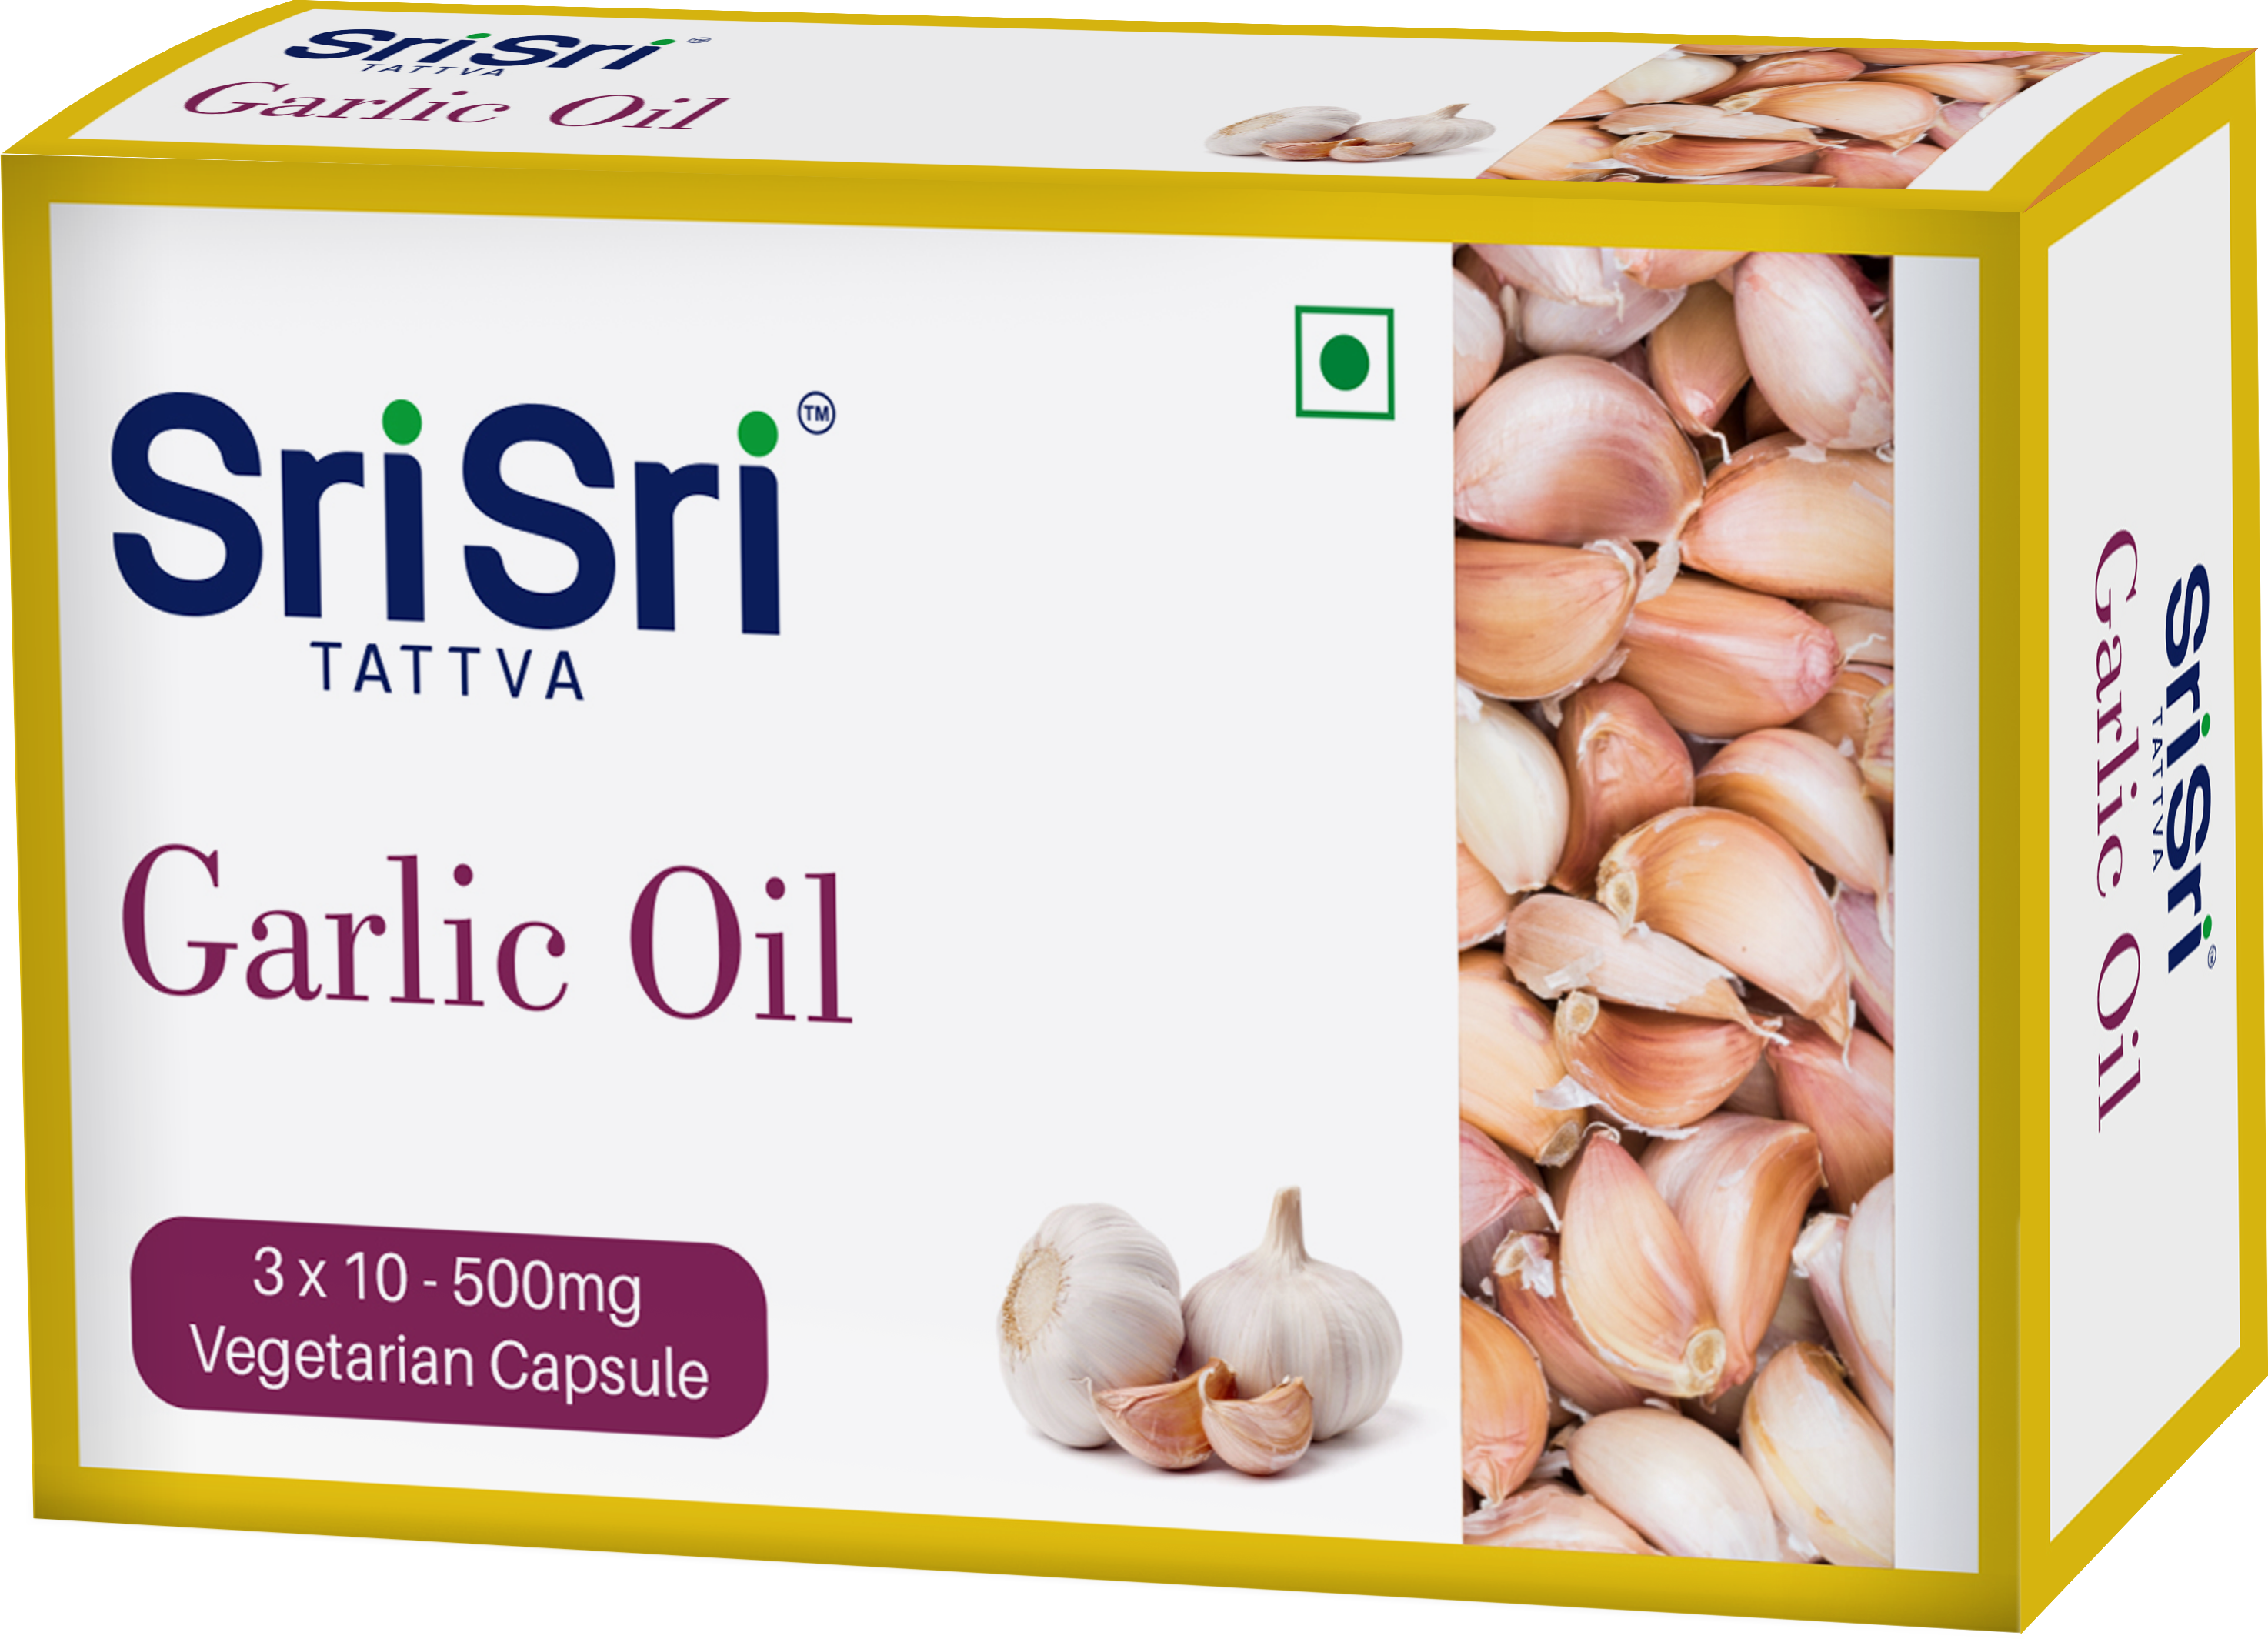 Buy Sri Sri Tattva Garlic Oil Veg Capsule at Best Price Online